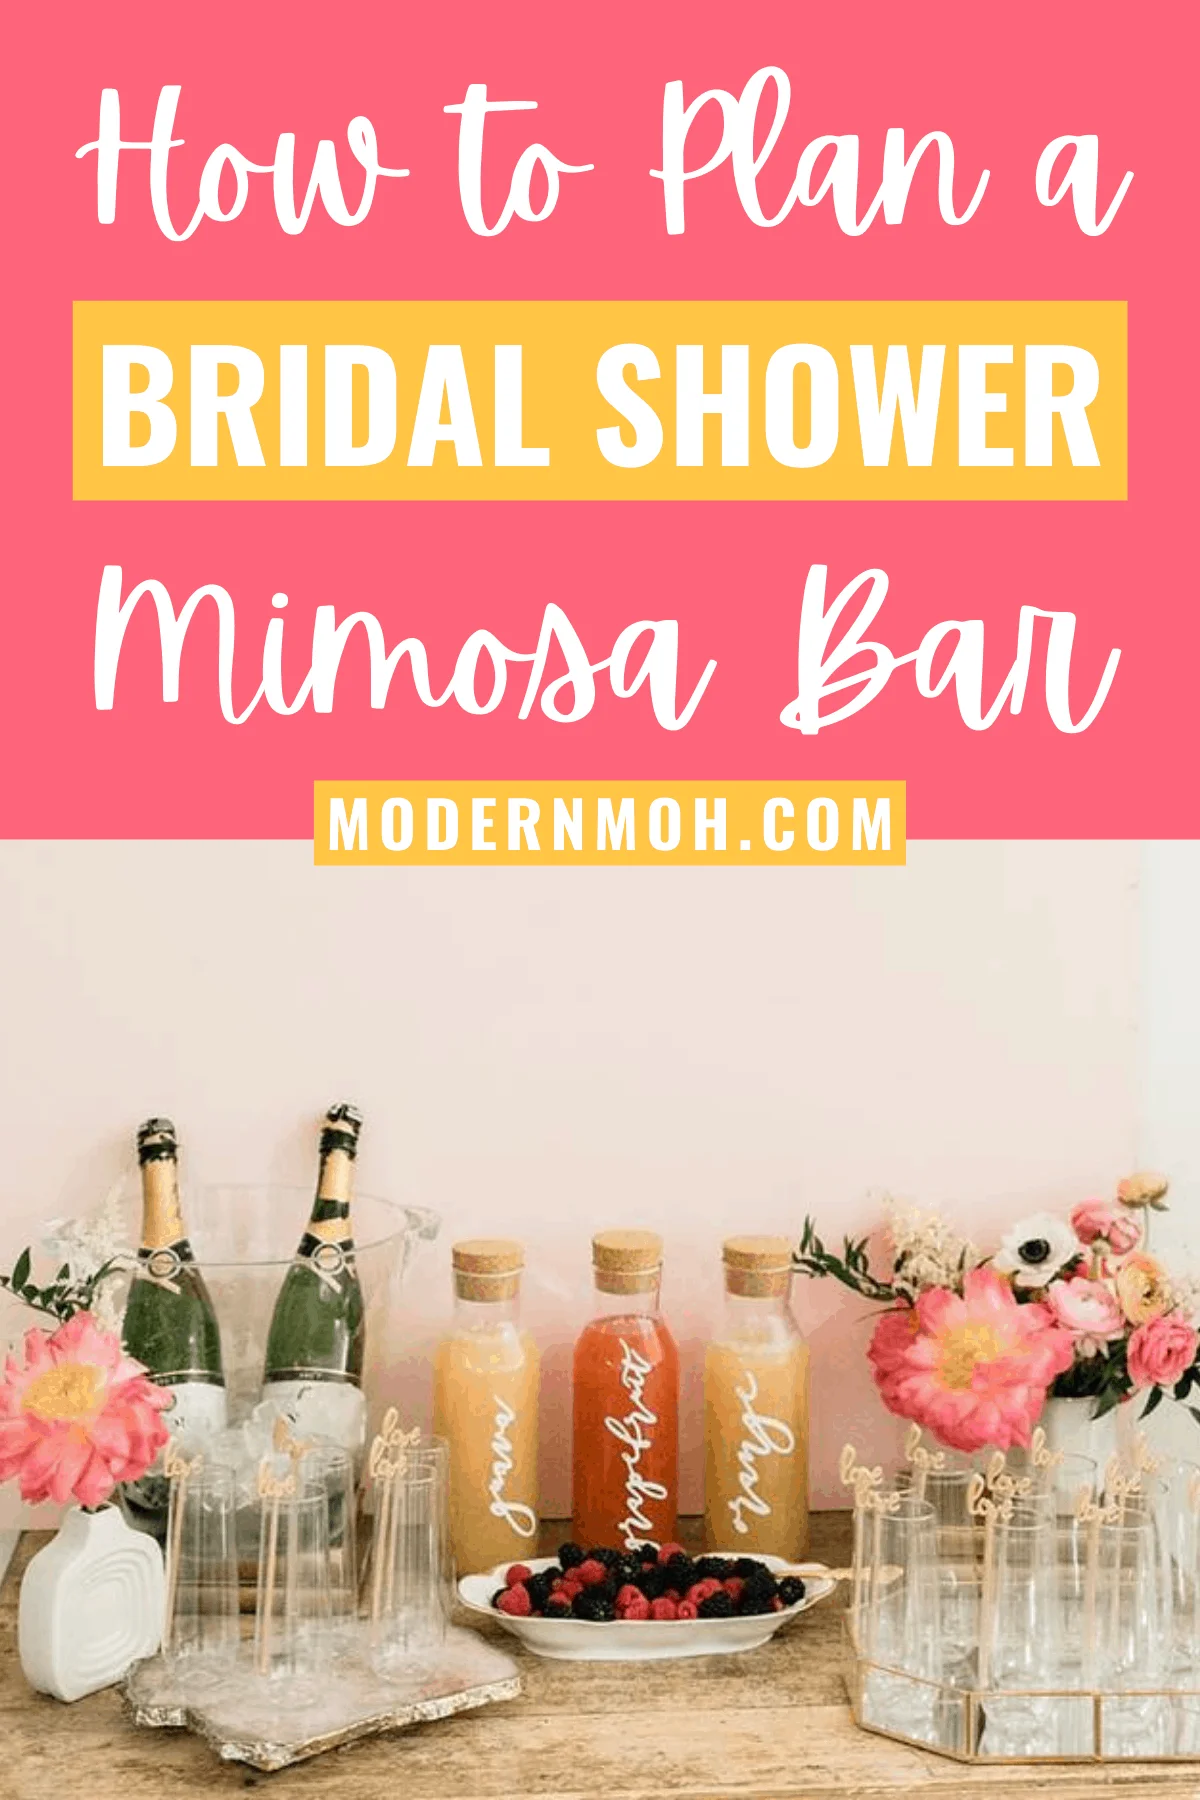 DIY Mimosa Bar - How to Make Mimosa Bar by Yourself